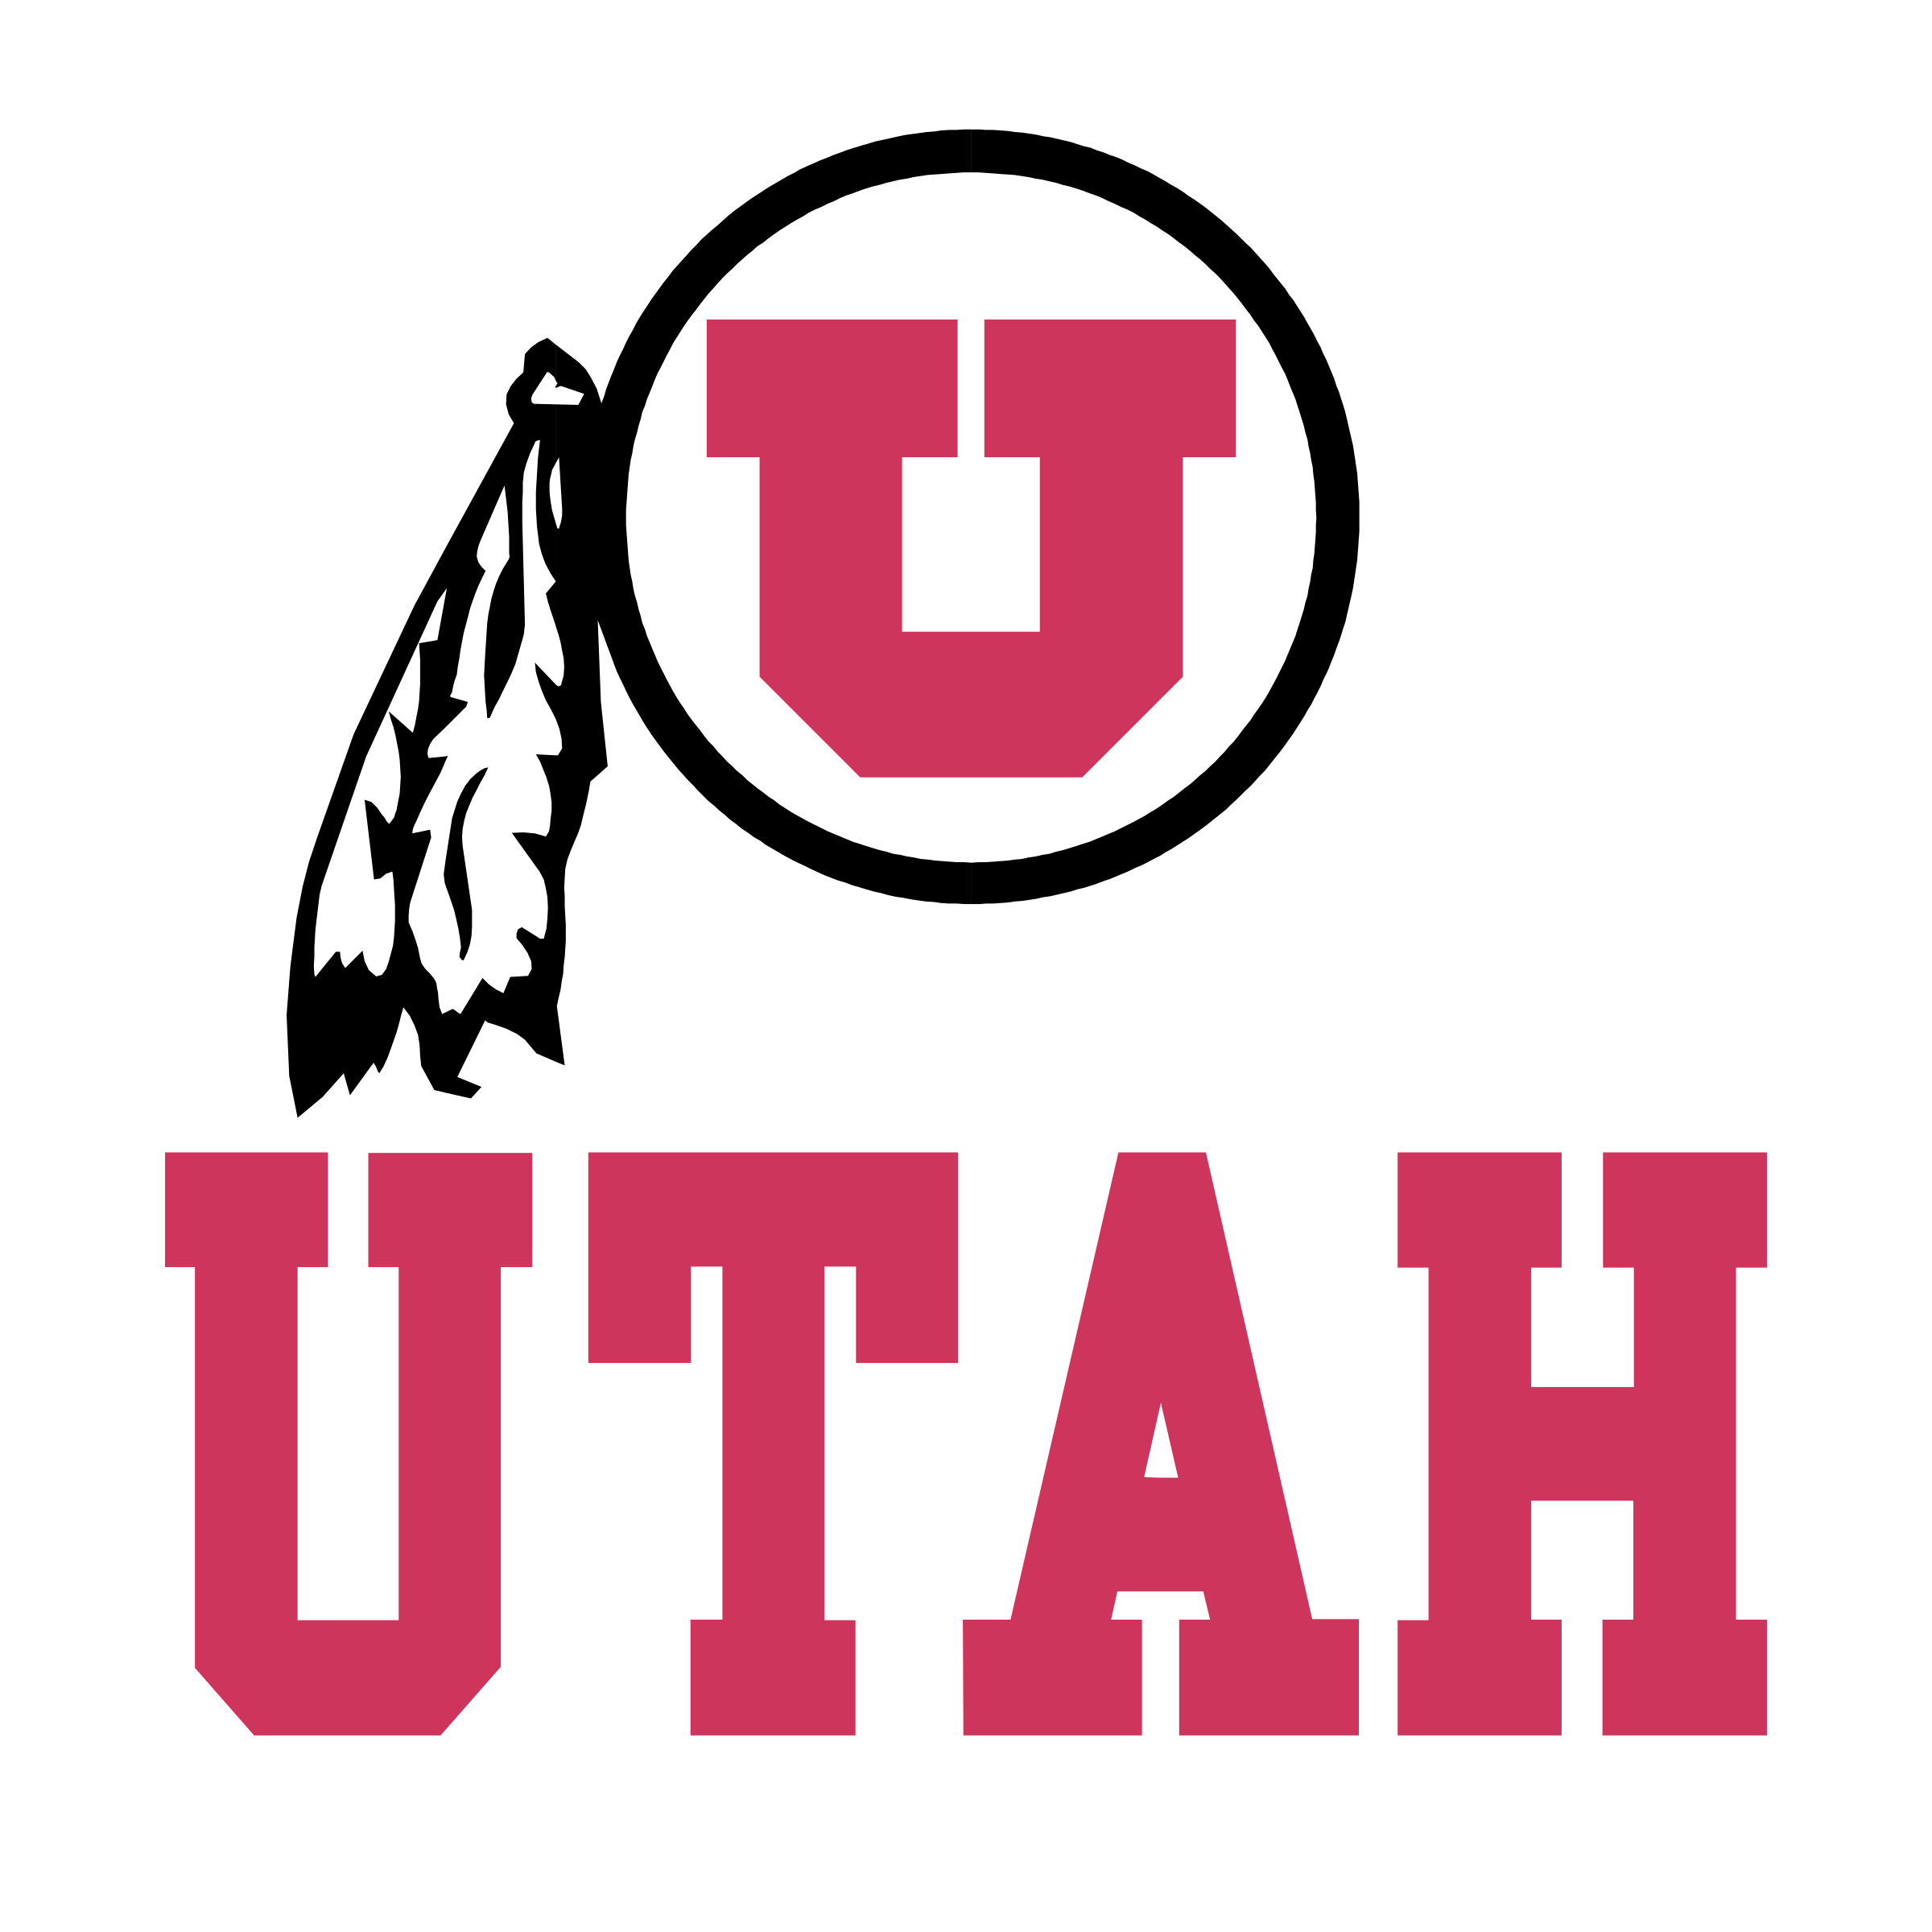 The Utes Logo - Utah Utes Logo PNG Transparent & SVG Vector - Freebie Supply